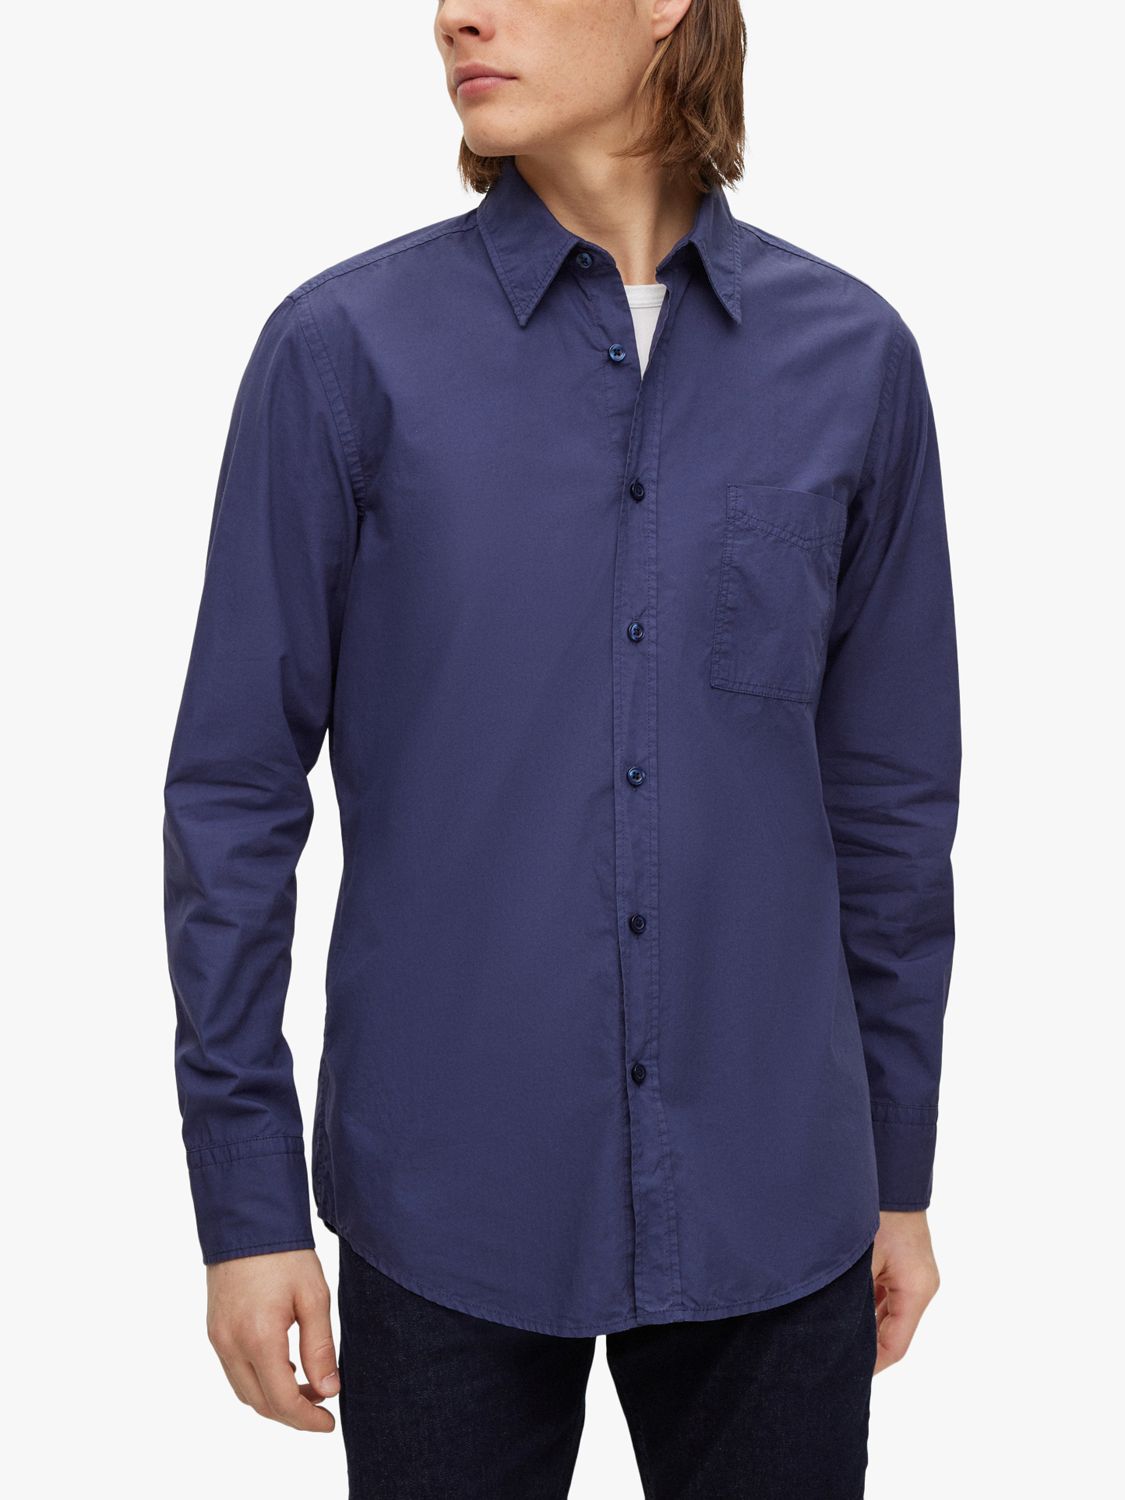 BOSS Relegant Regular Fit Garment Dyed Shirt, Navy at John Lewis & Partners